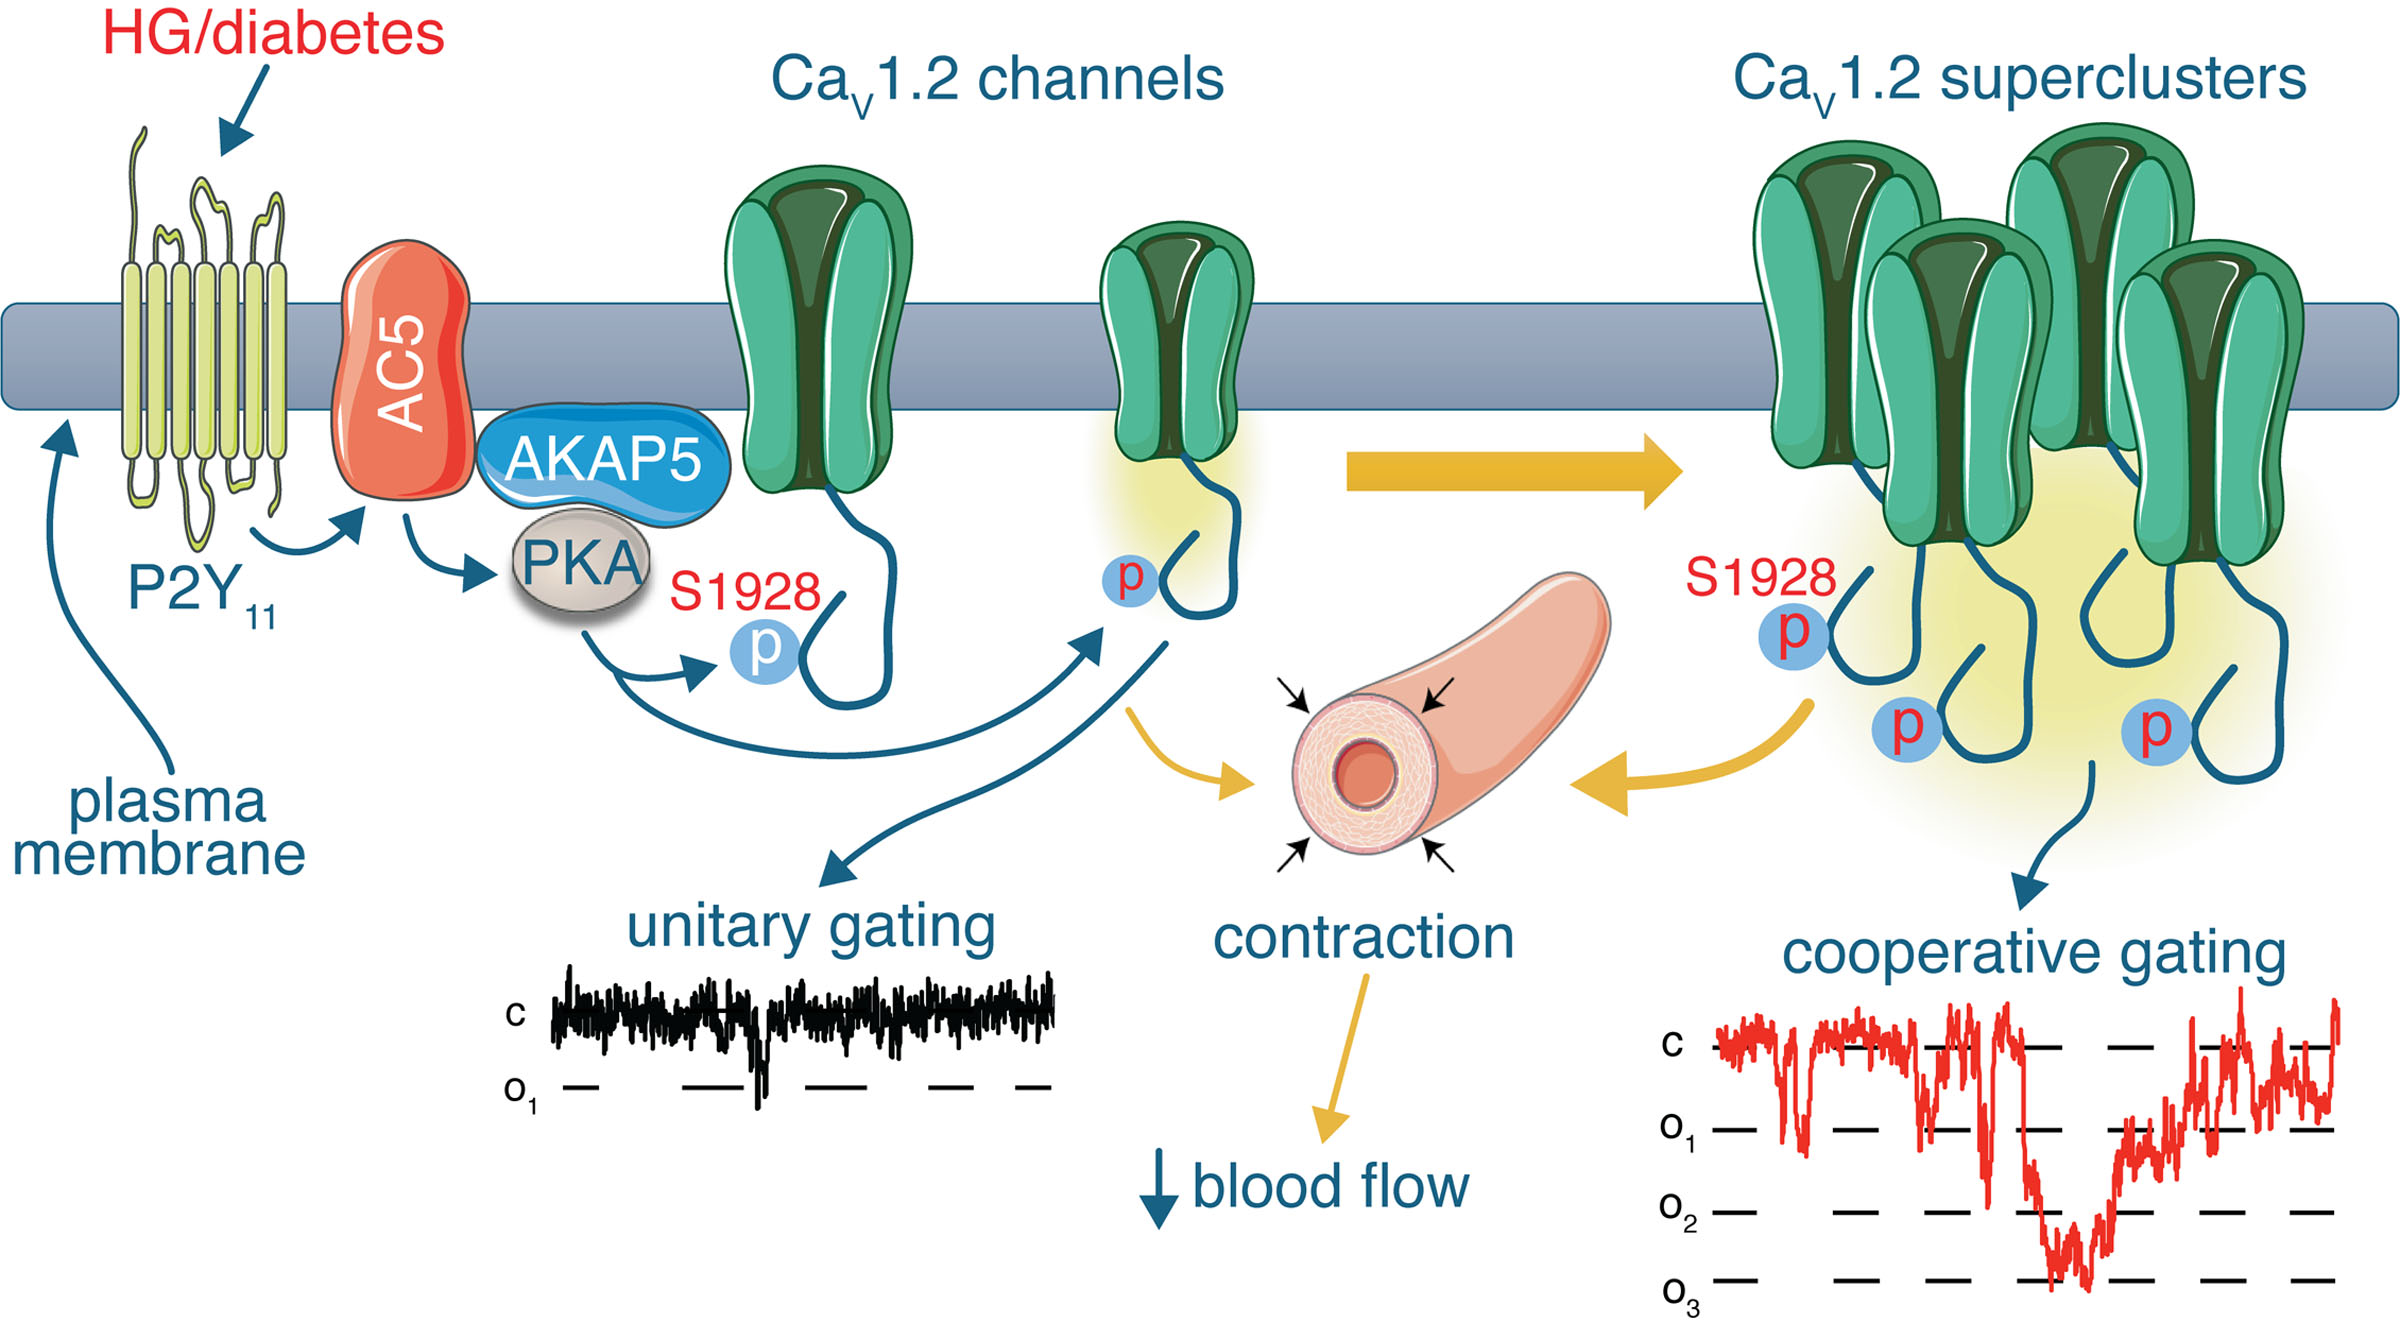 Spatiotemporal Control of Vascular CaV1.2 by α1C S1928 Phosphorylation